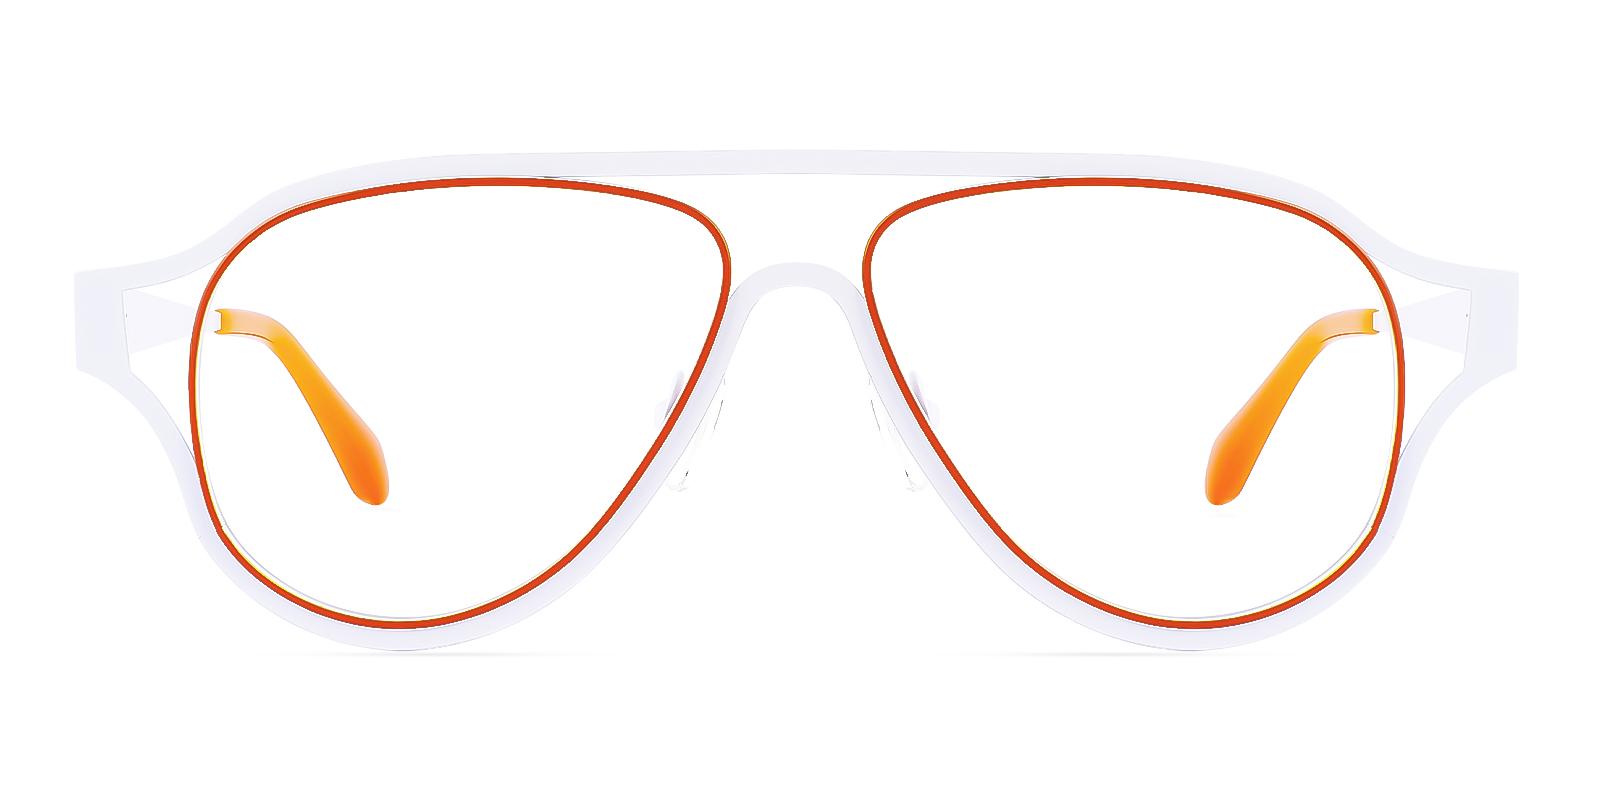 Presentile White Metal Eyeglasses , NosePads Frames from ABBE Glasses